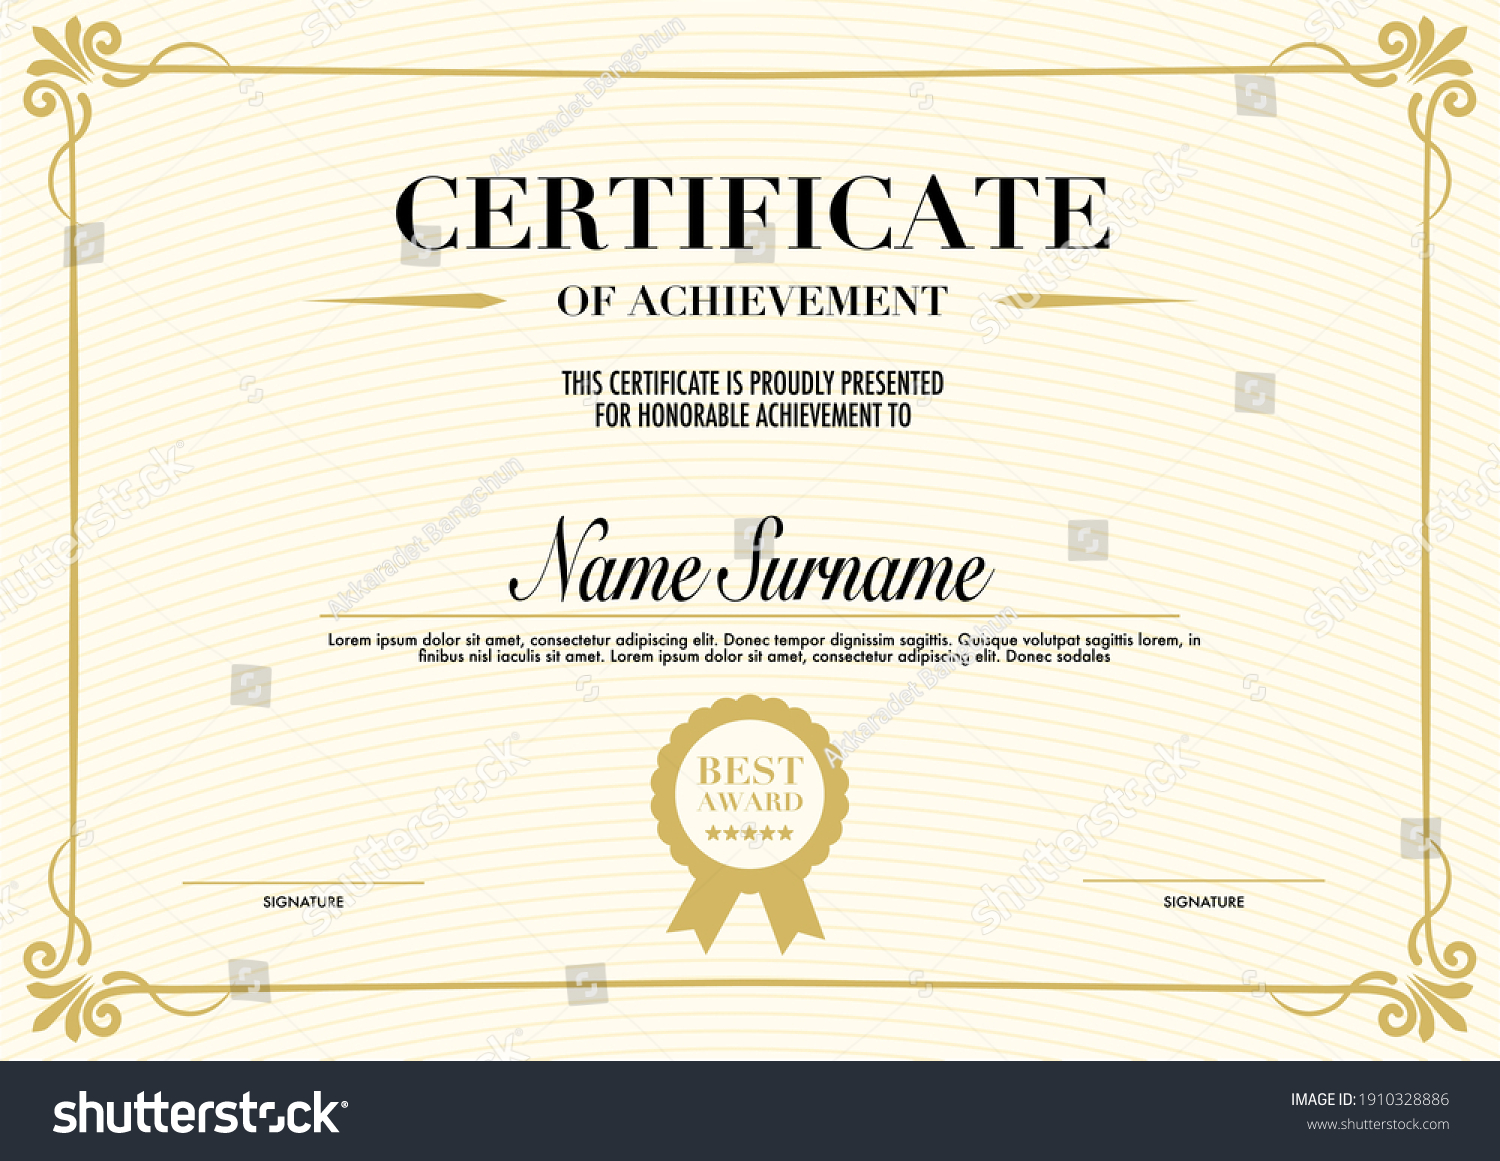 507,010 Certificate frame Images, Stock Photos & Vectors | Shutterstock